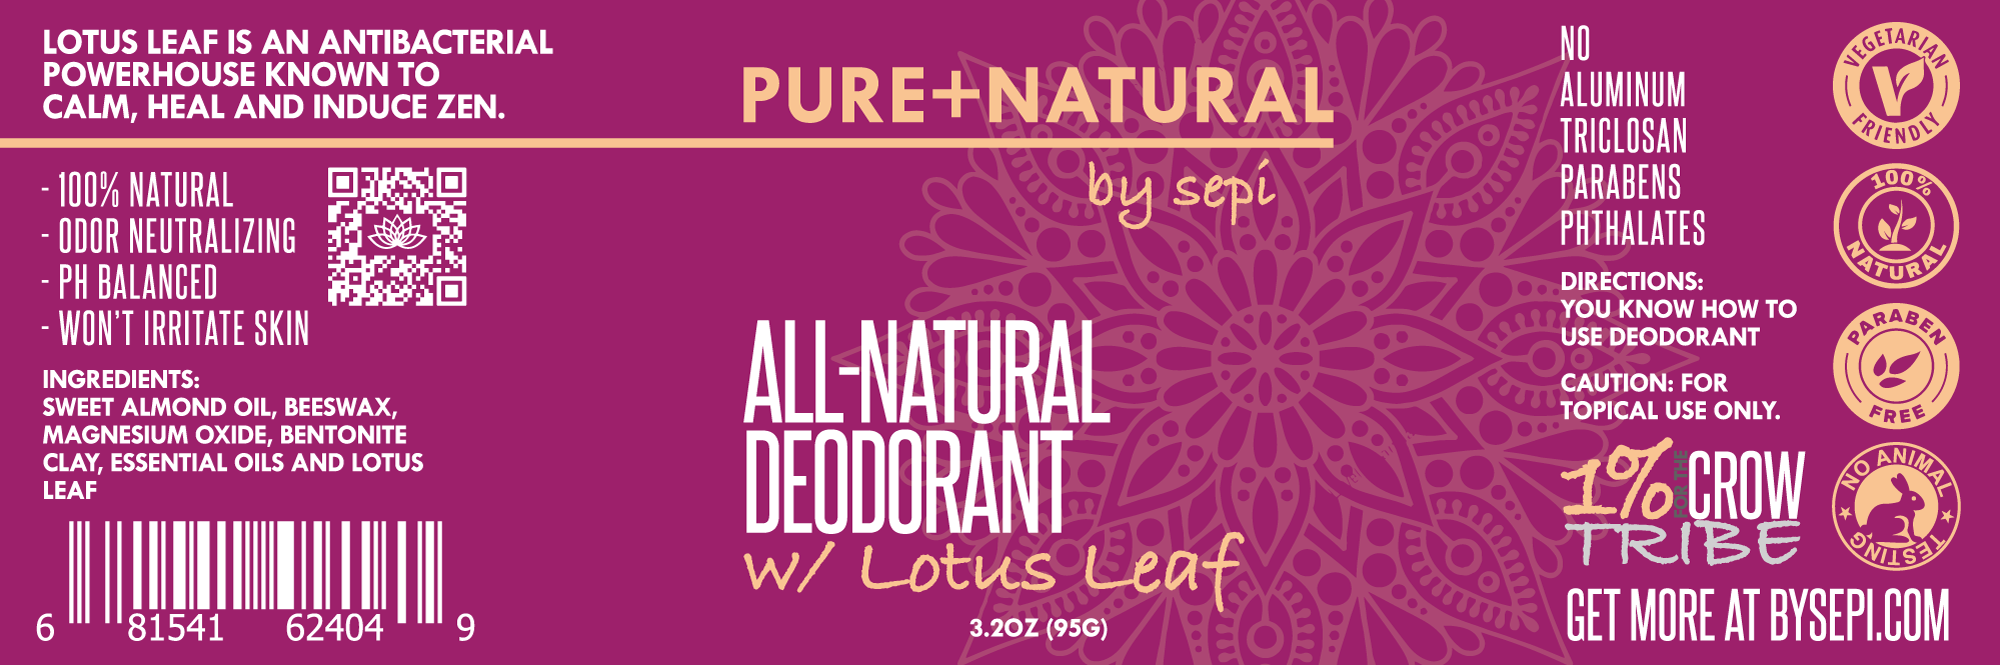 Lotus Leaf All-Natural Deodorant